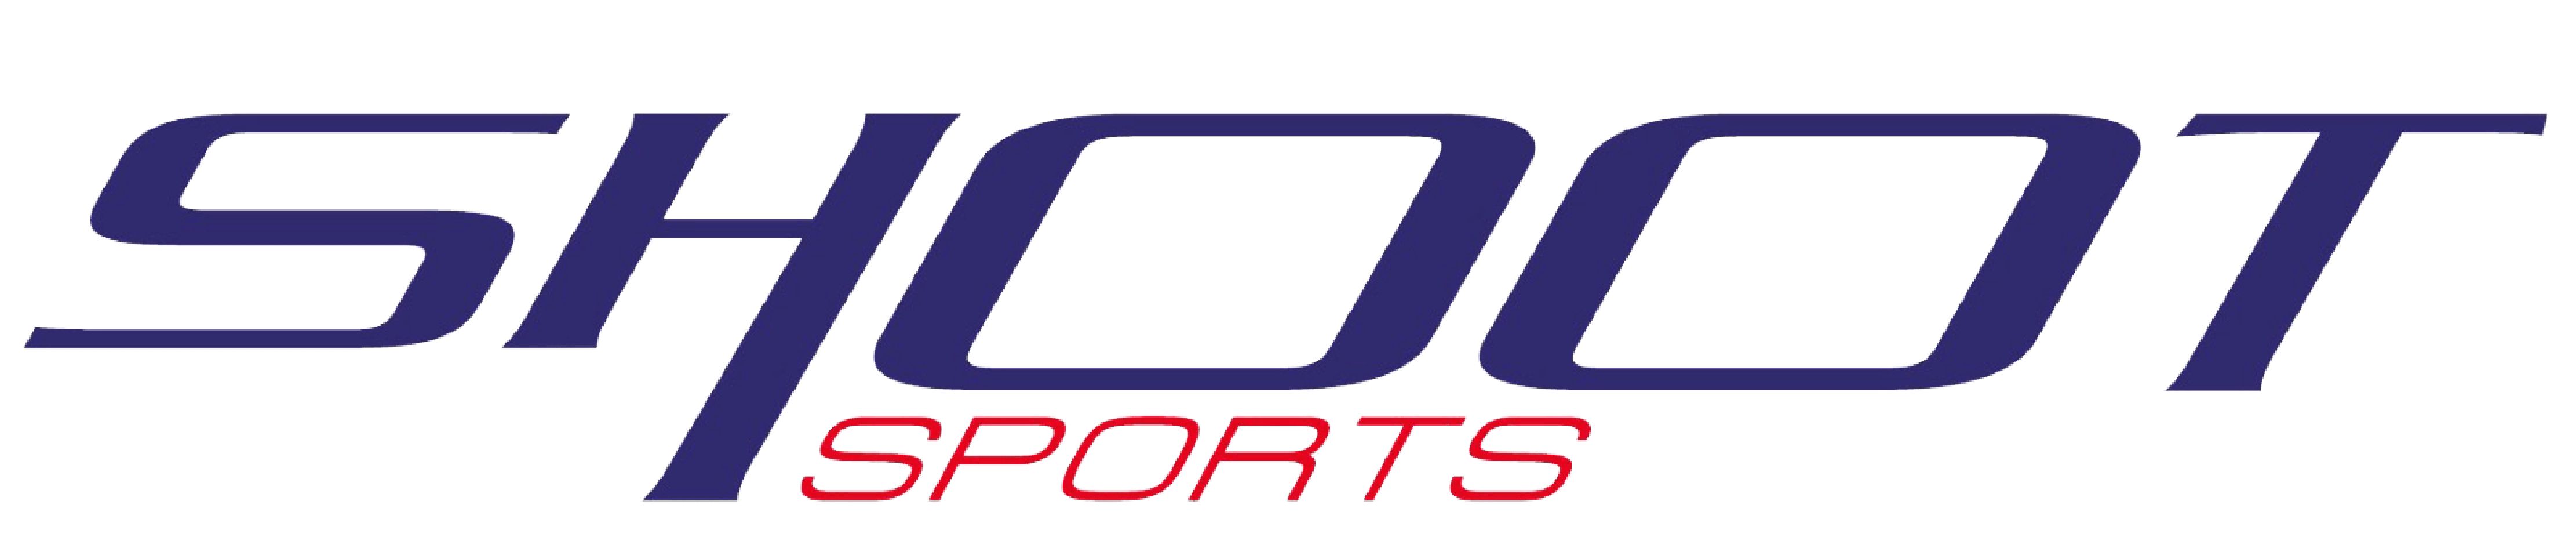 shoot soprts logo -1